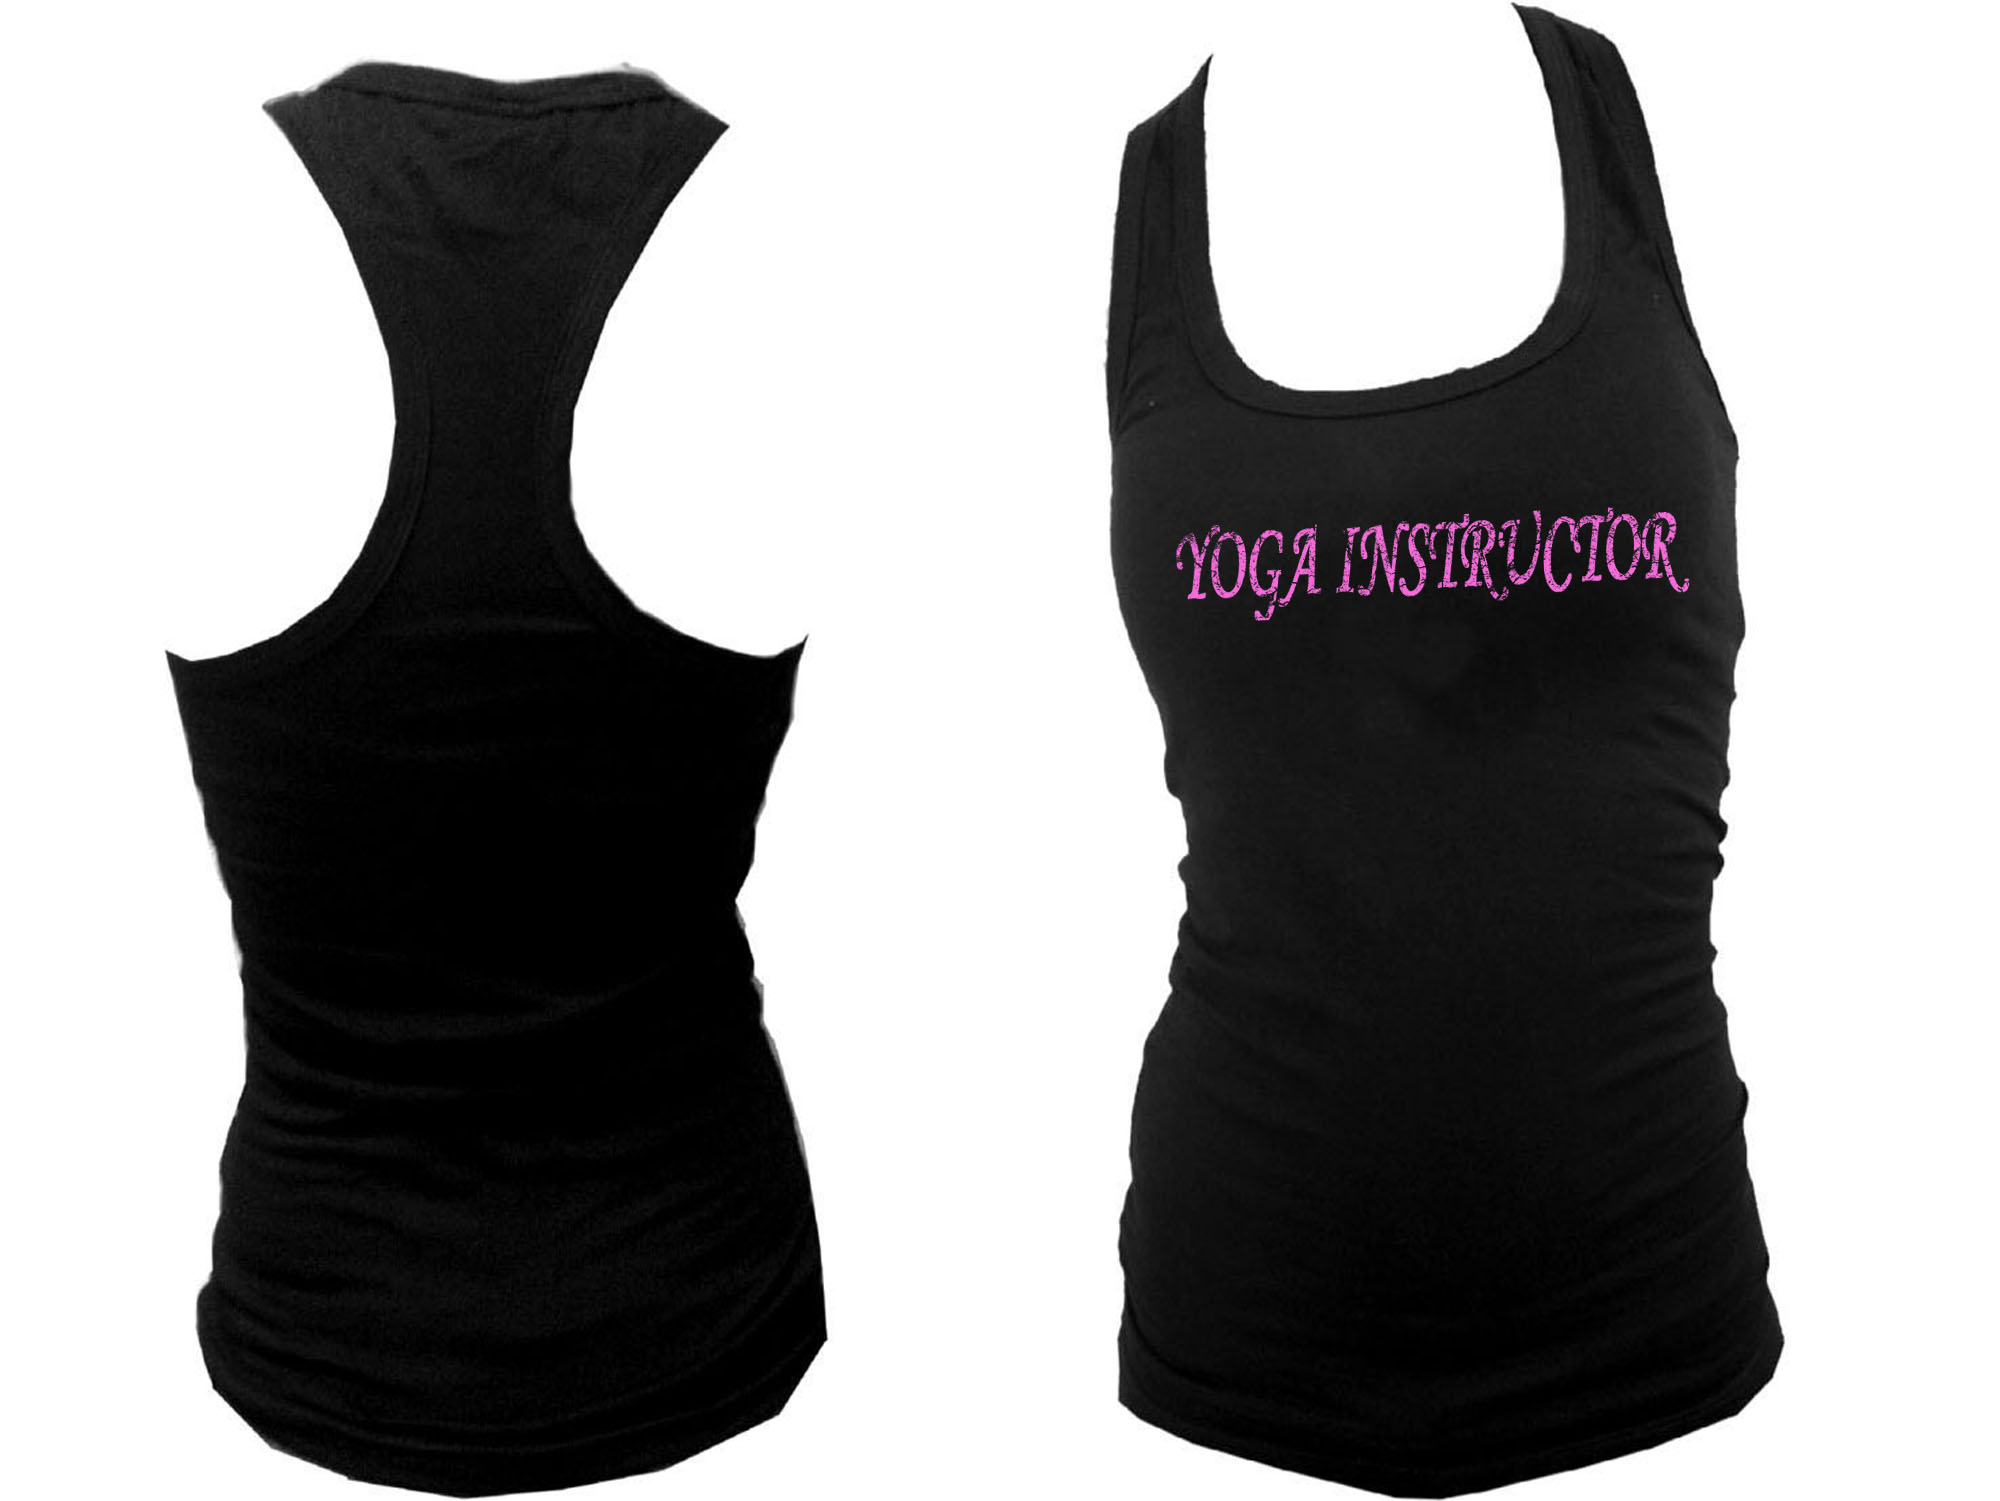 Yoga instructor racerback sleeveless women tank top L/XL